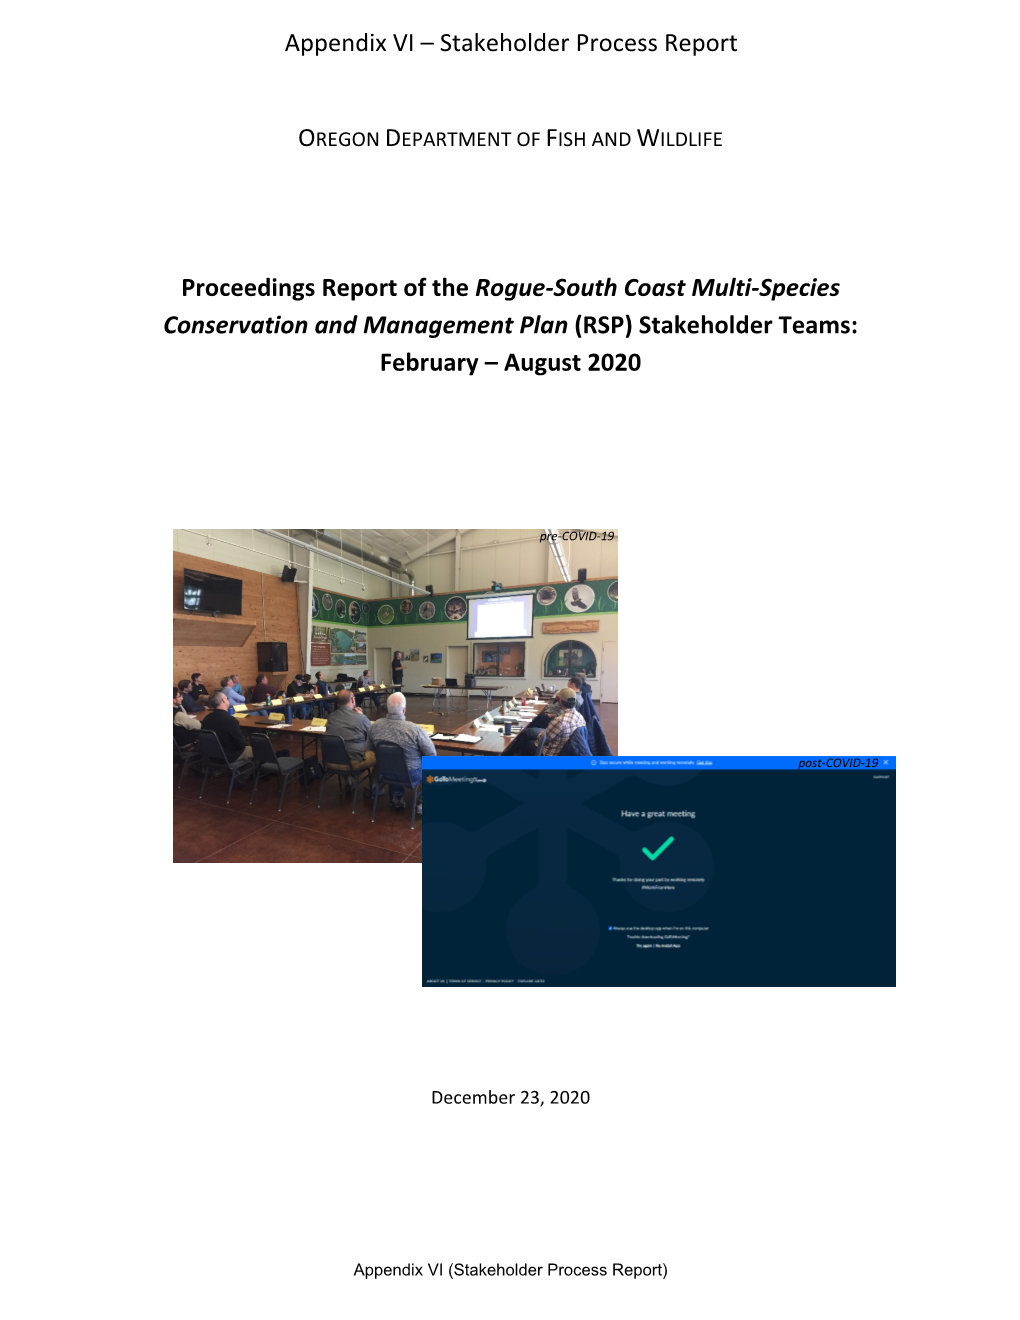 RSP Public Review Draft Appendix VI-Stakeholder Process Report